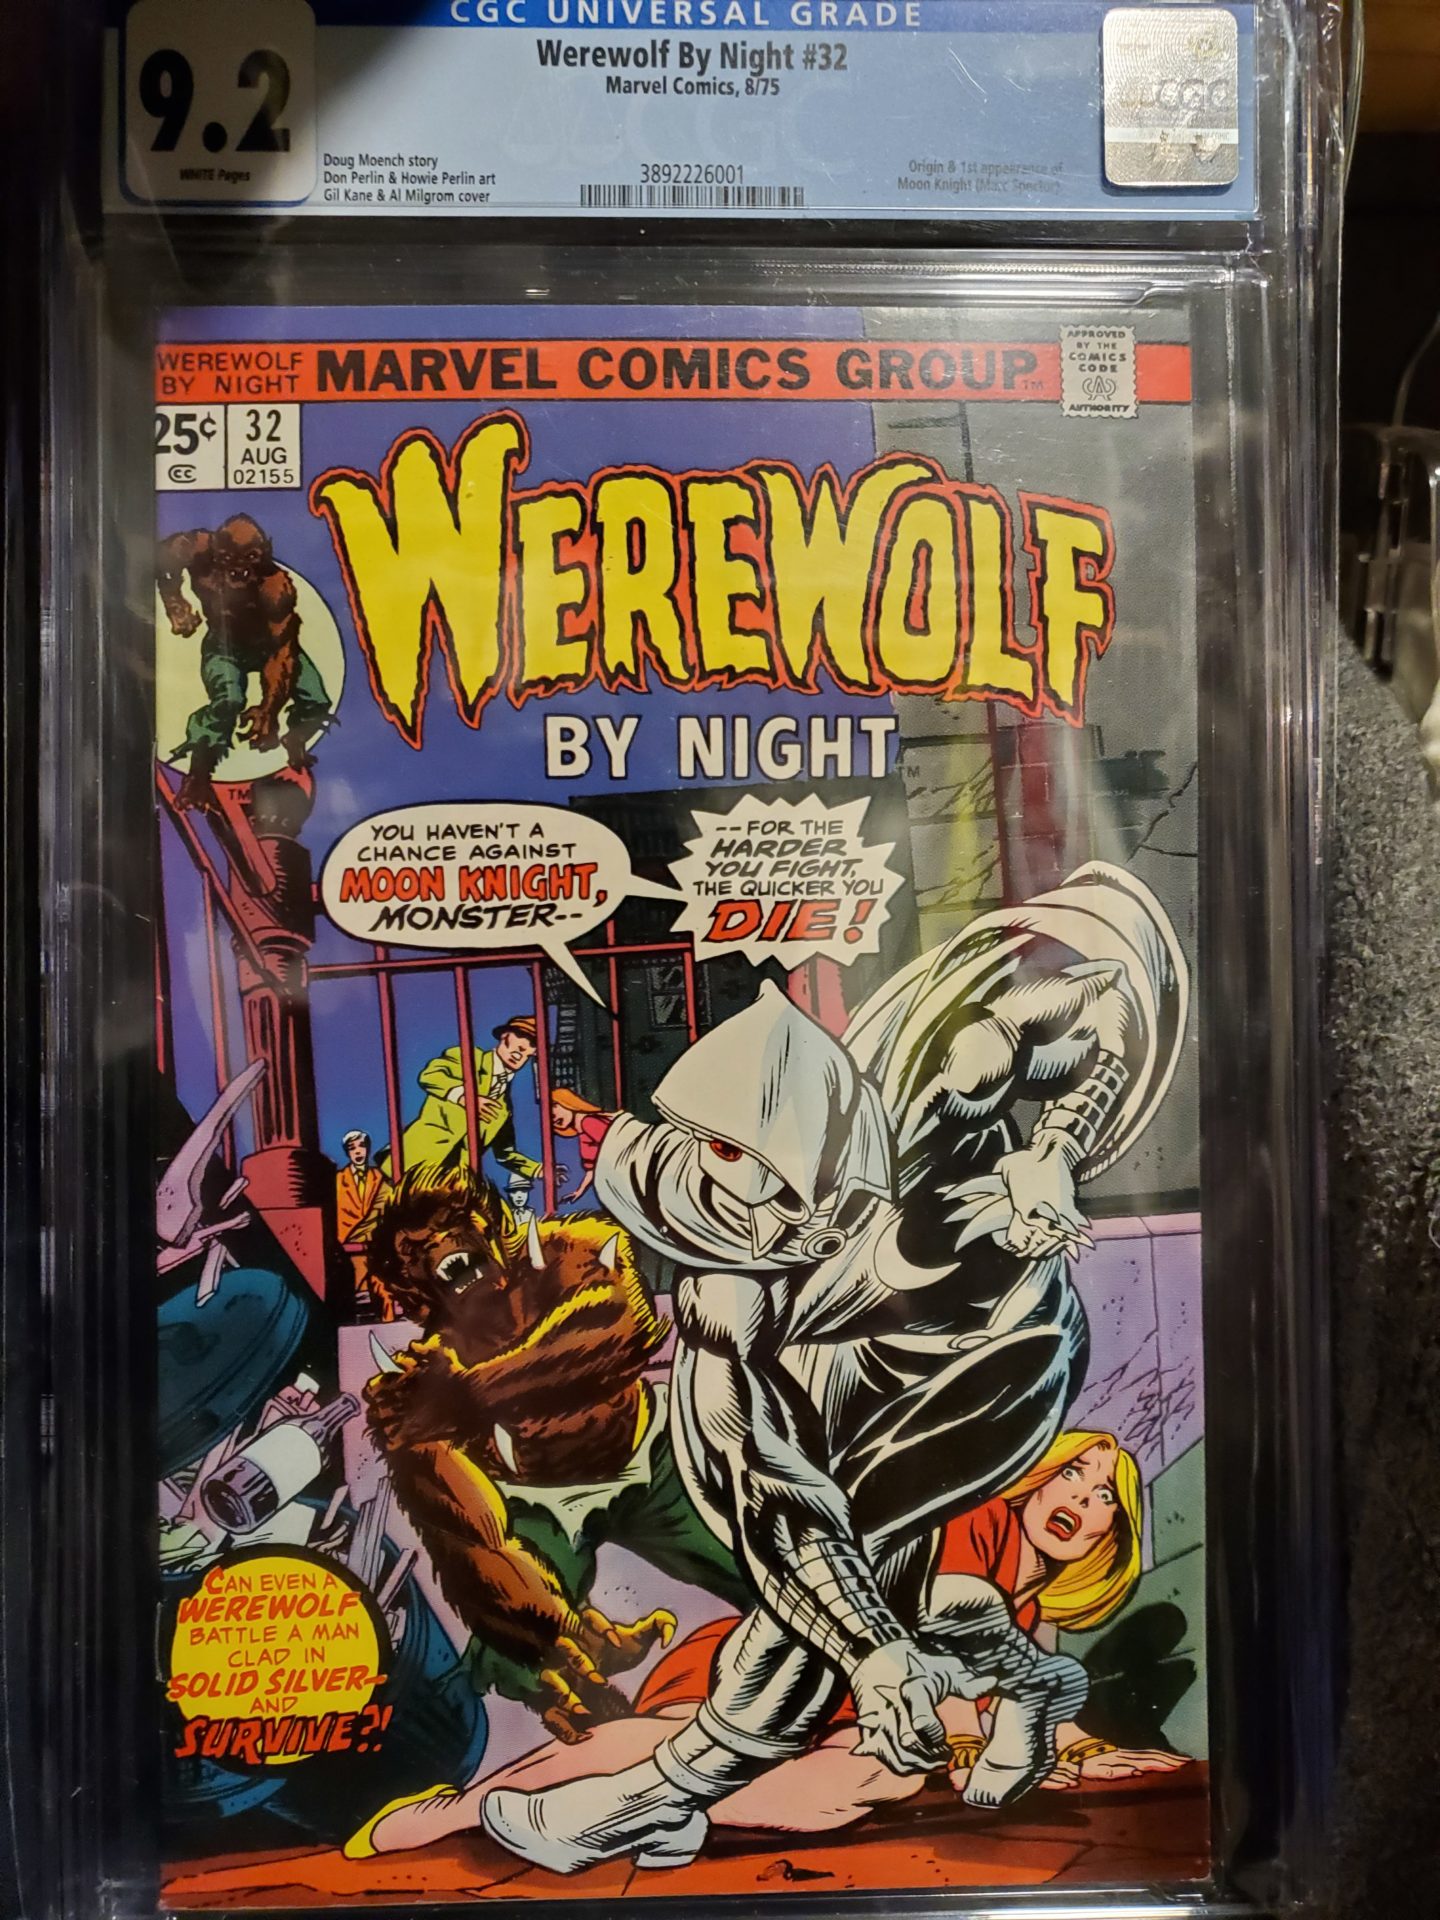 Werewolf by Moon Knight